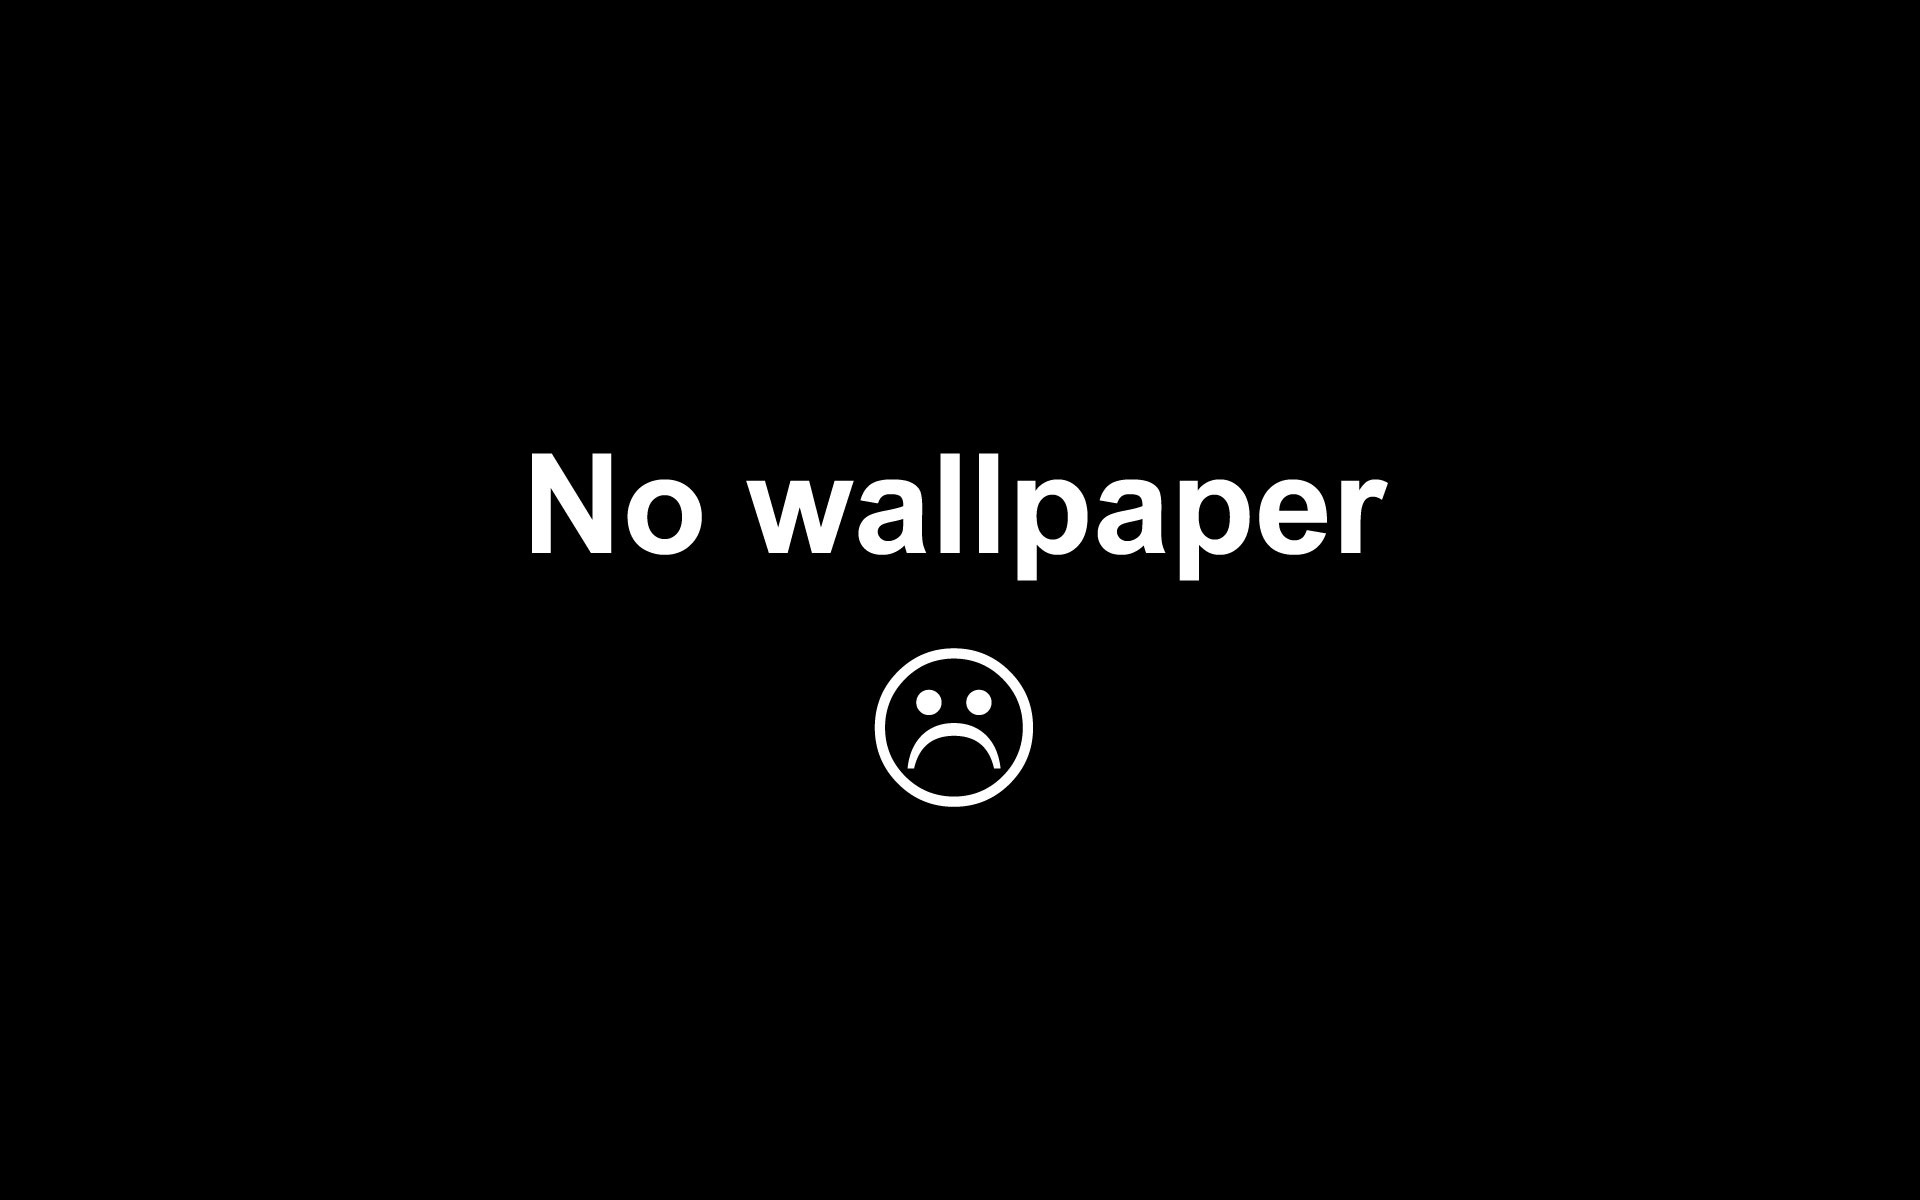 No wallpaper Desktop Wallpapers FREE on Latorocom 1920x1200